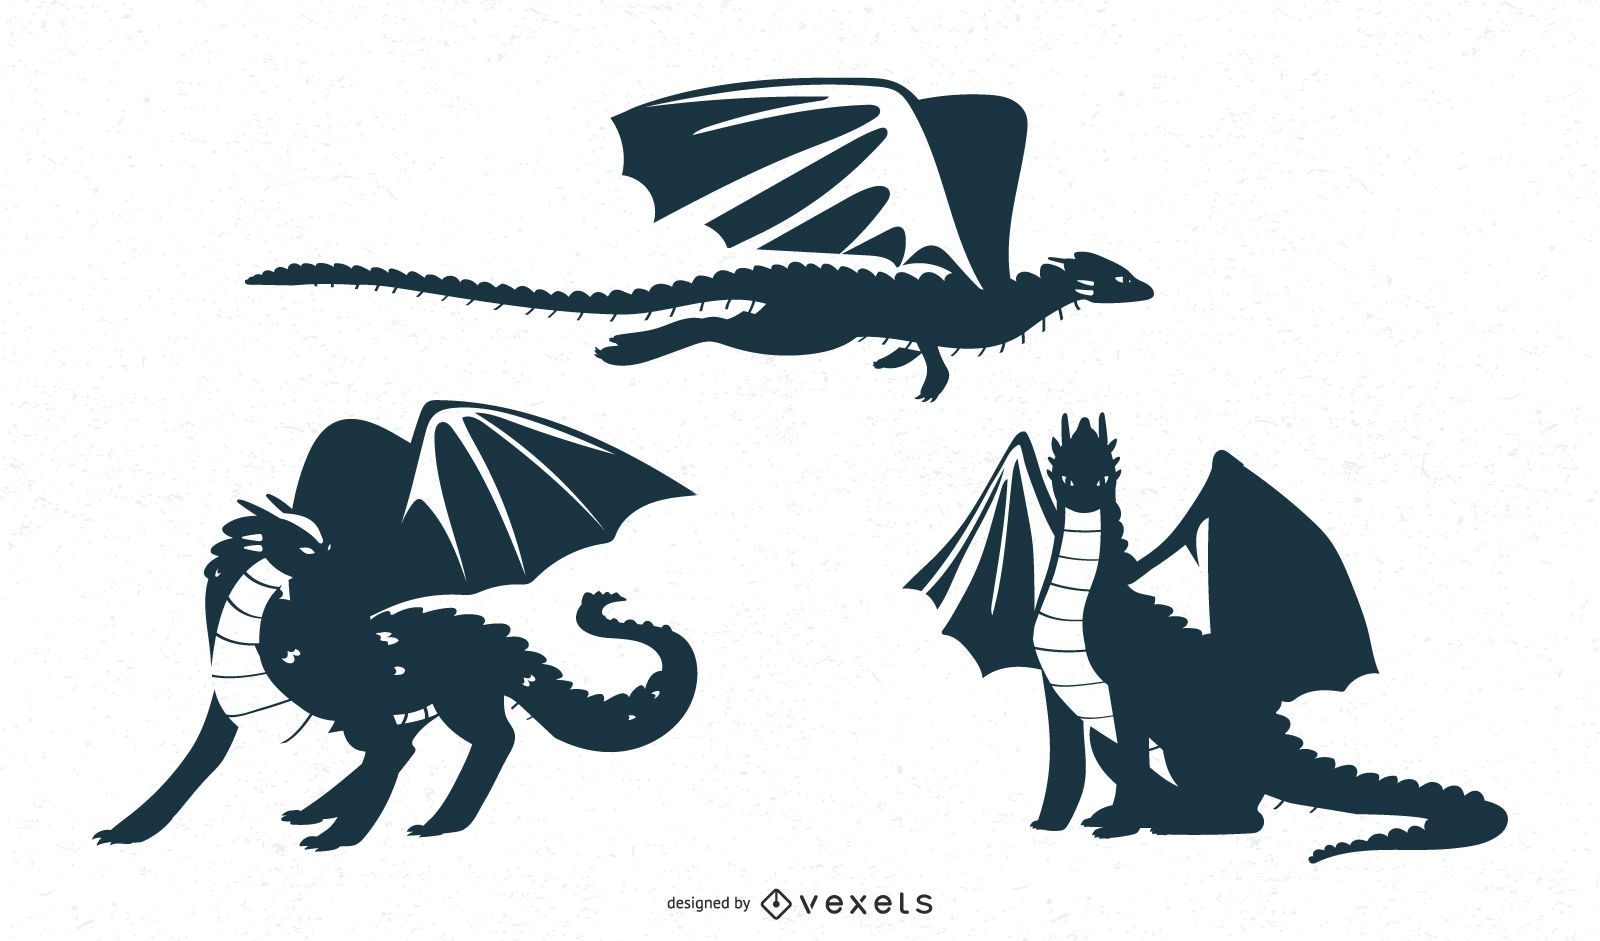 Dragon designs silhouettes